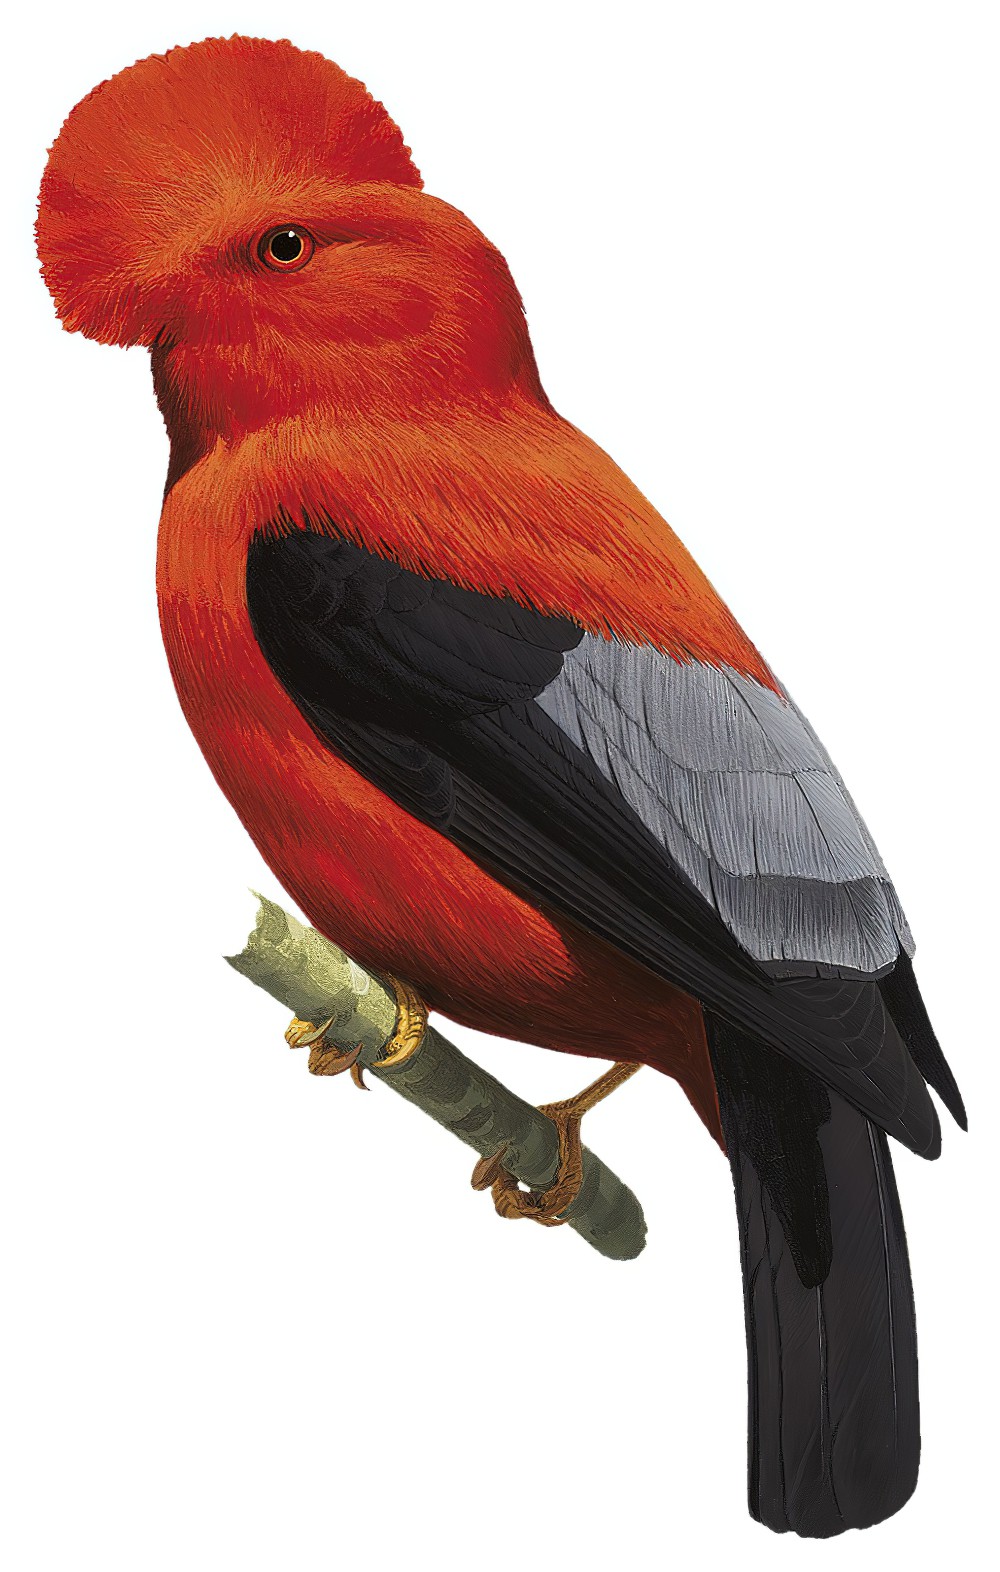 Andean Cock-of-the-rock / Rupicola peruvianus